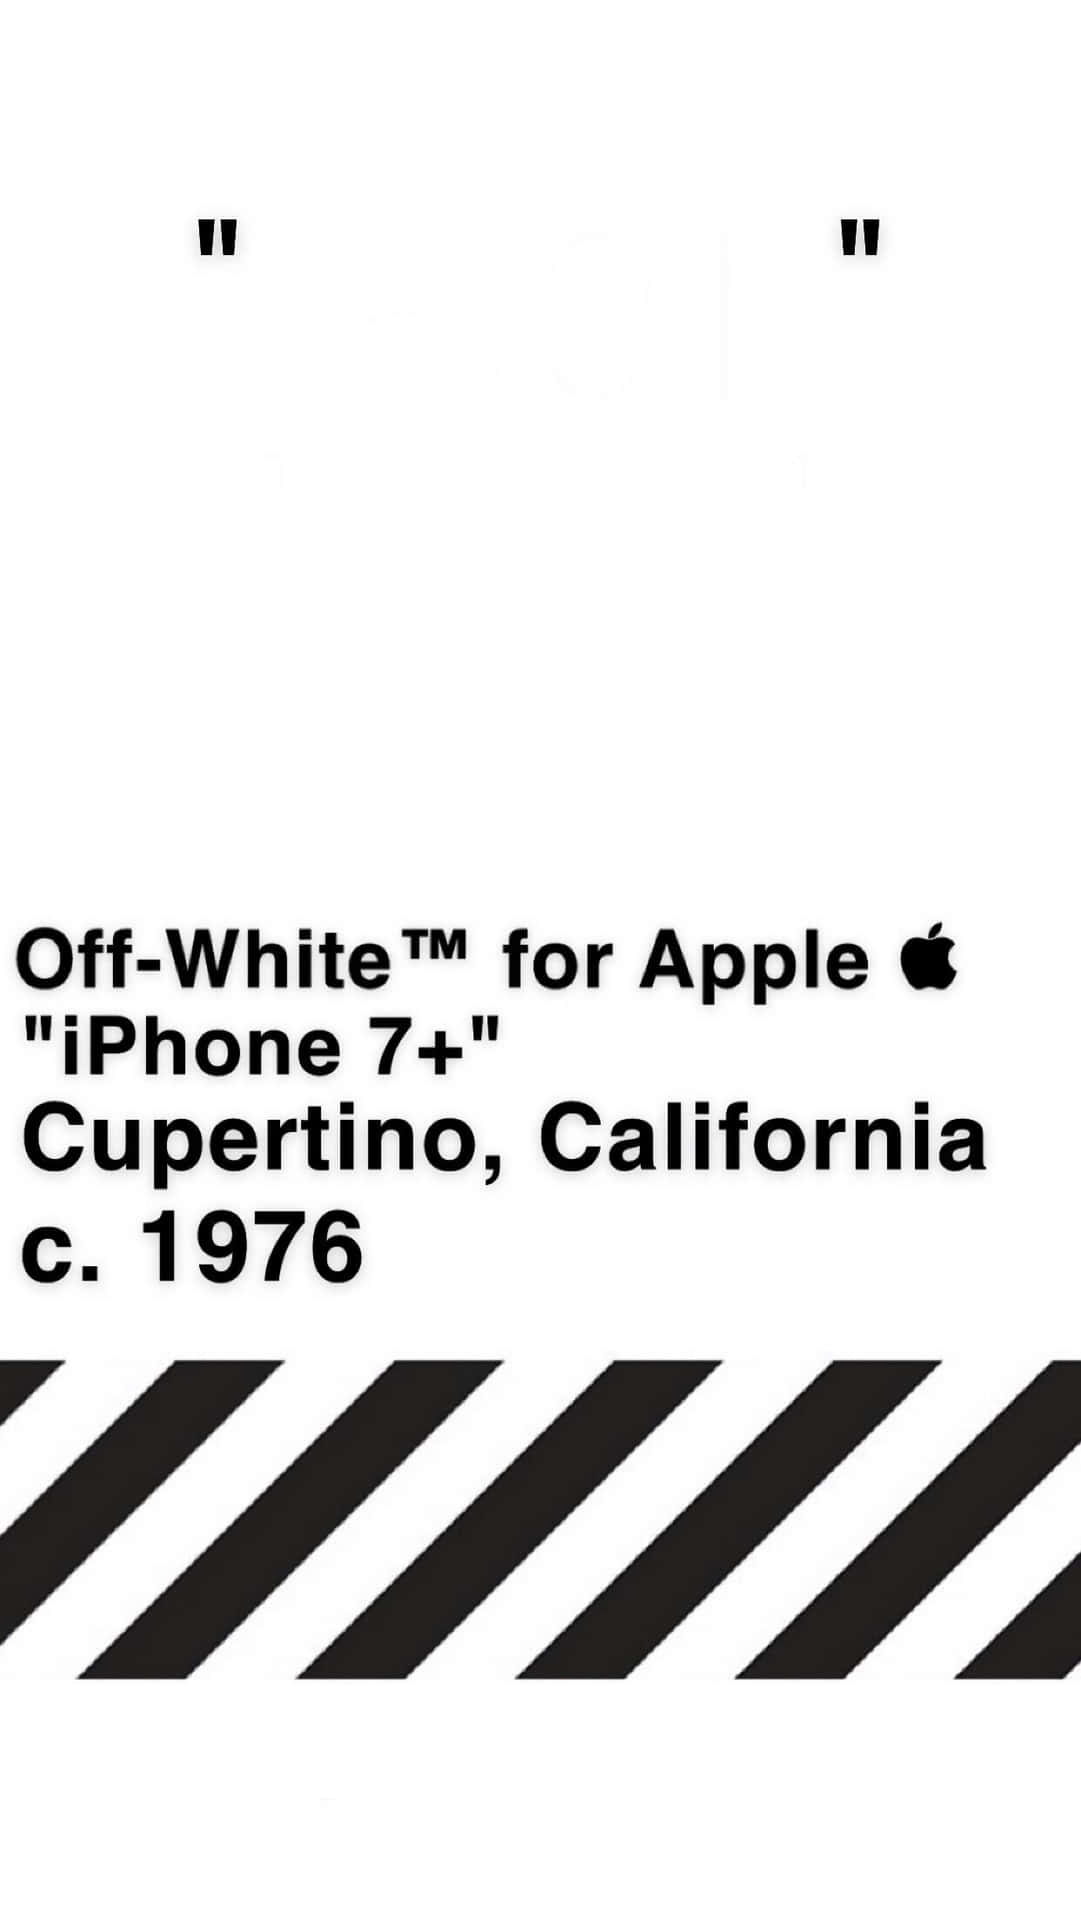 Appleipad-gerät In Off-white-farbe. Wallpaper